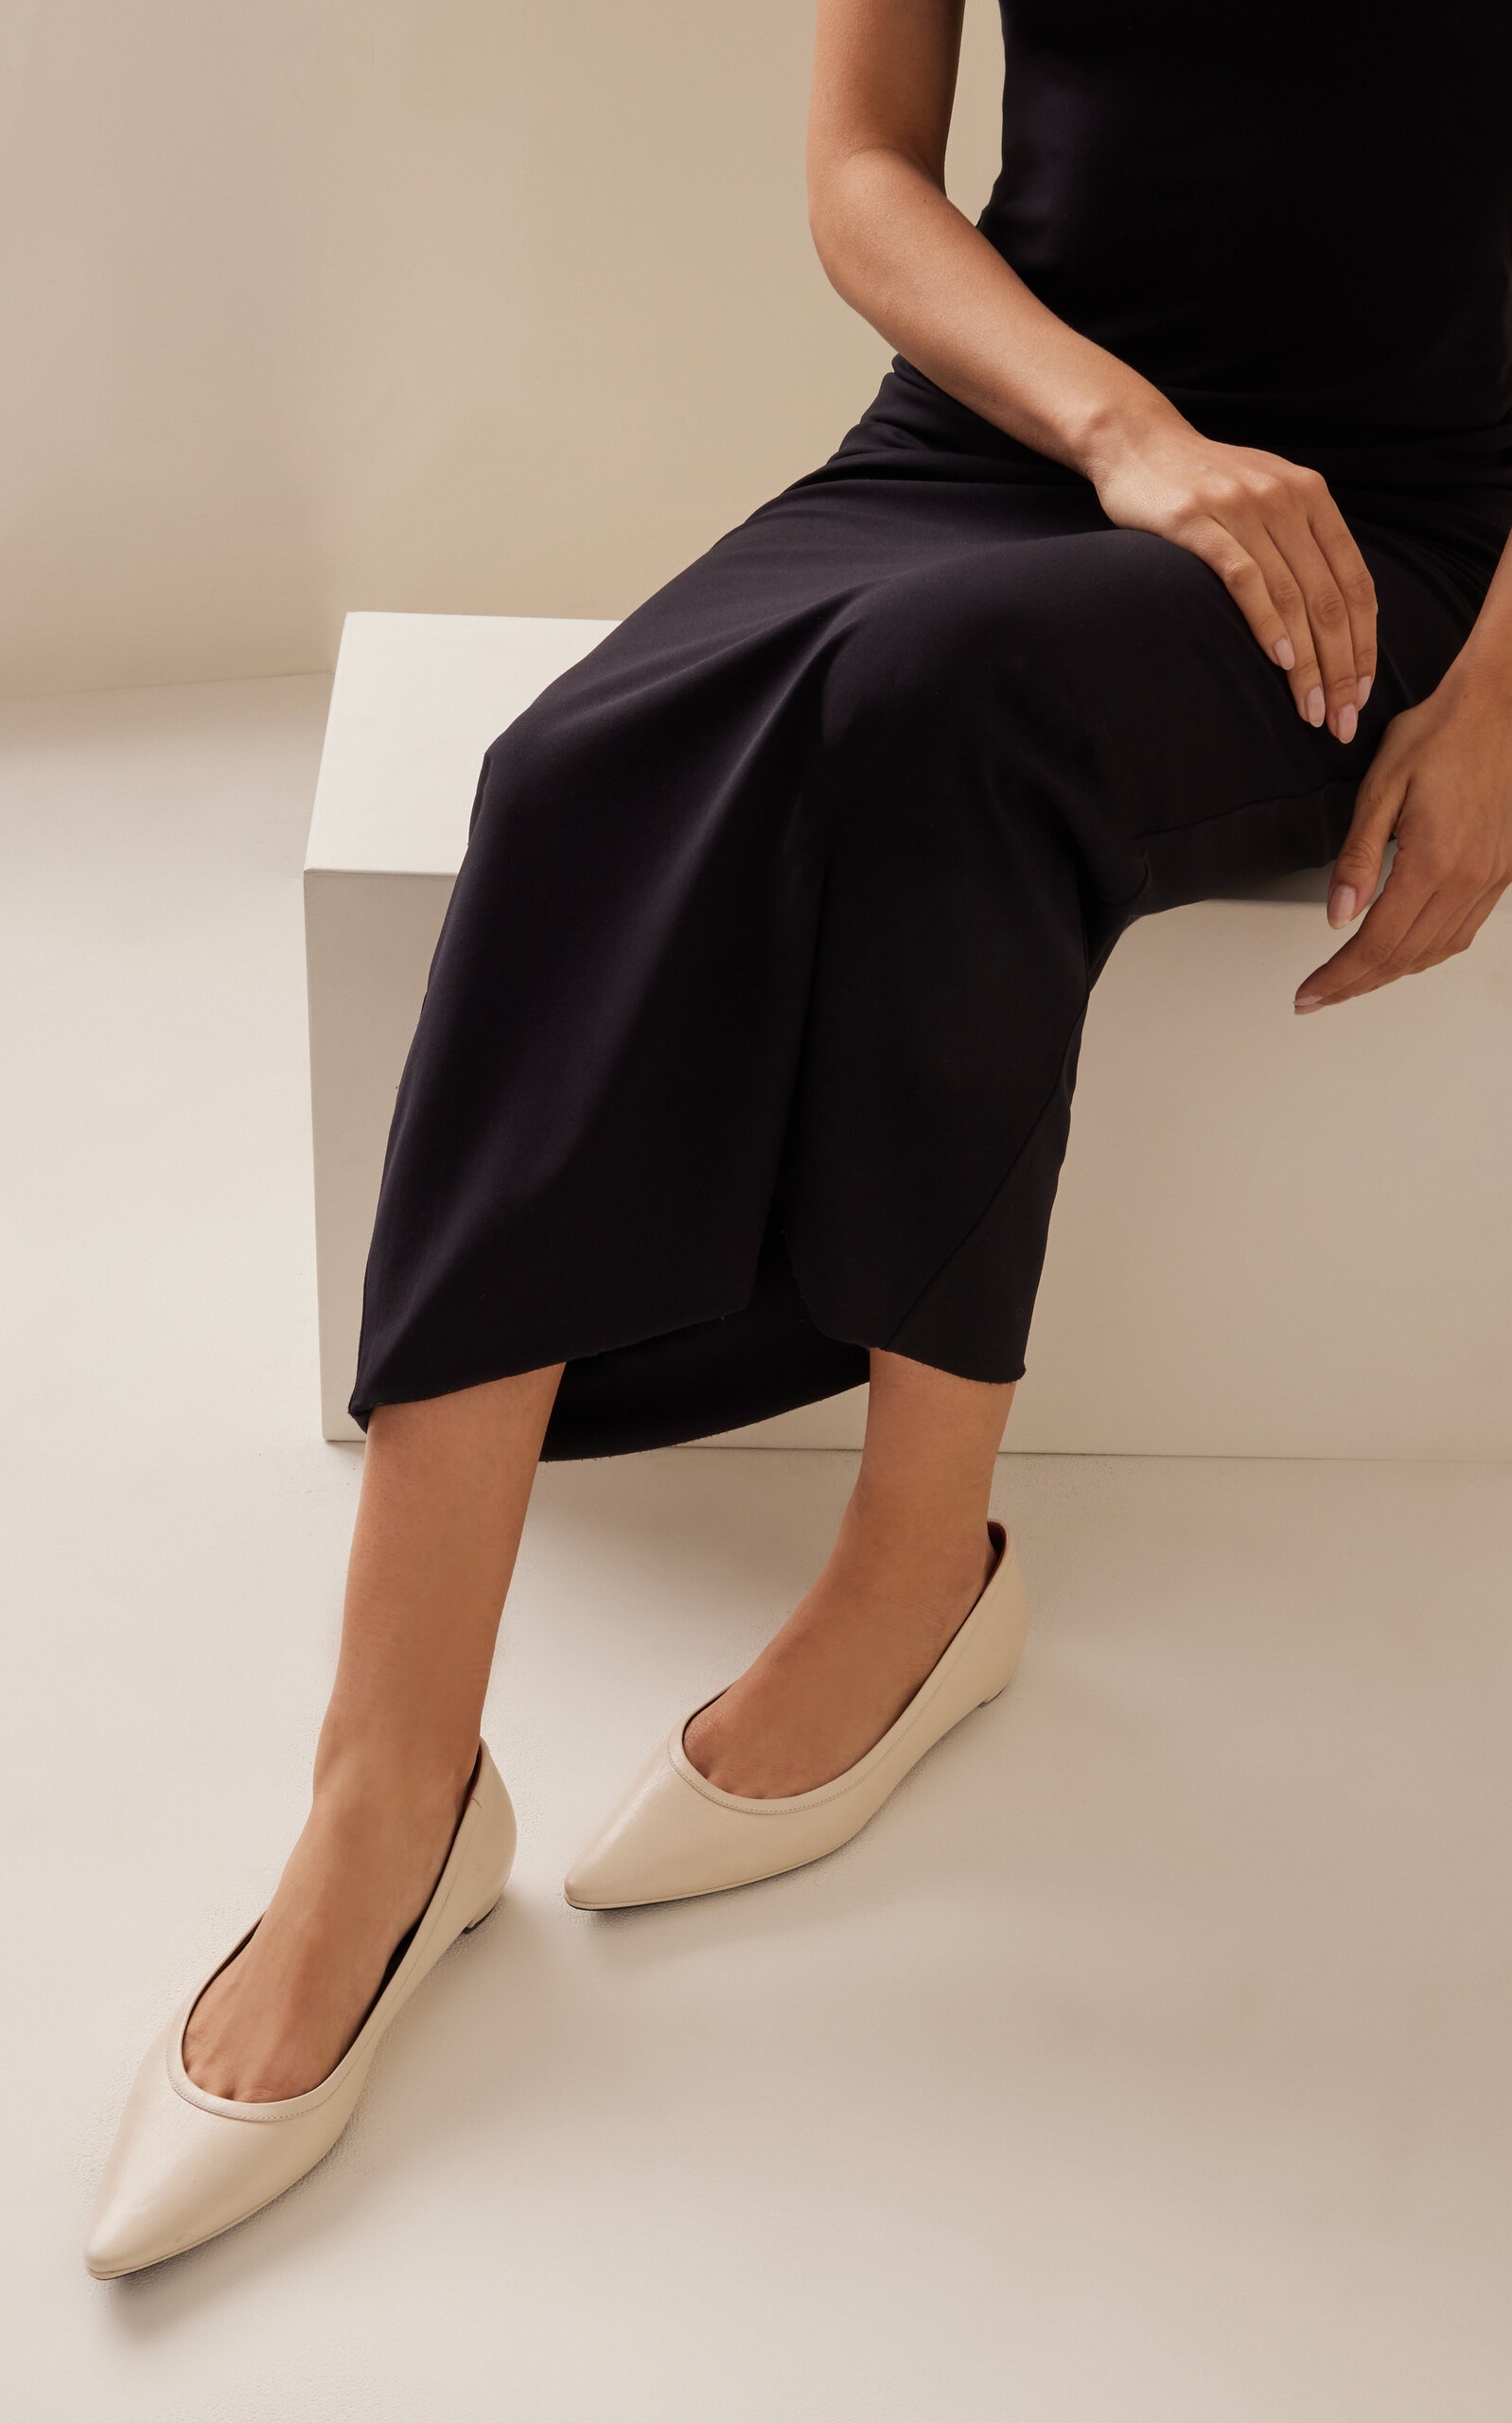 Claudette Leather Flats white - 3